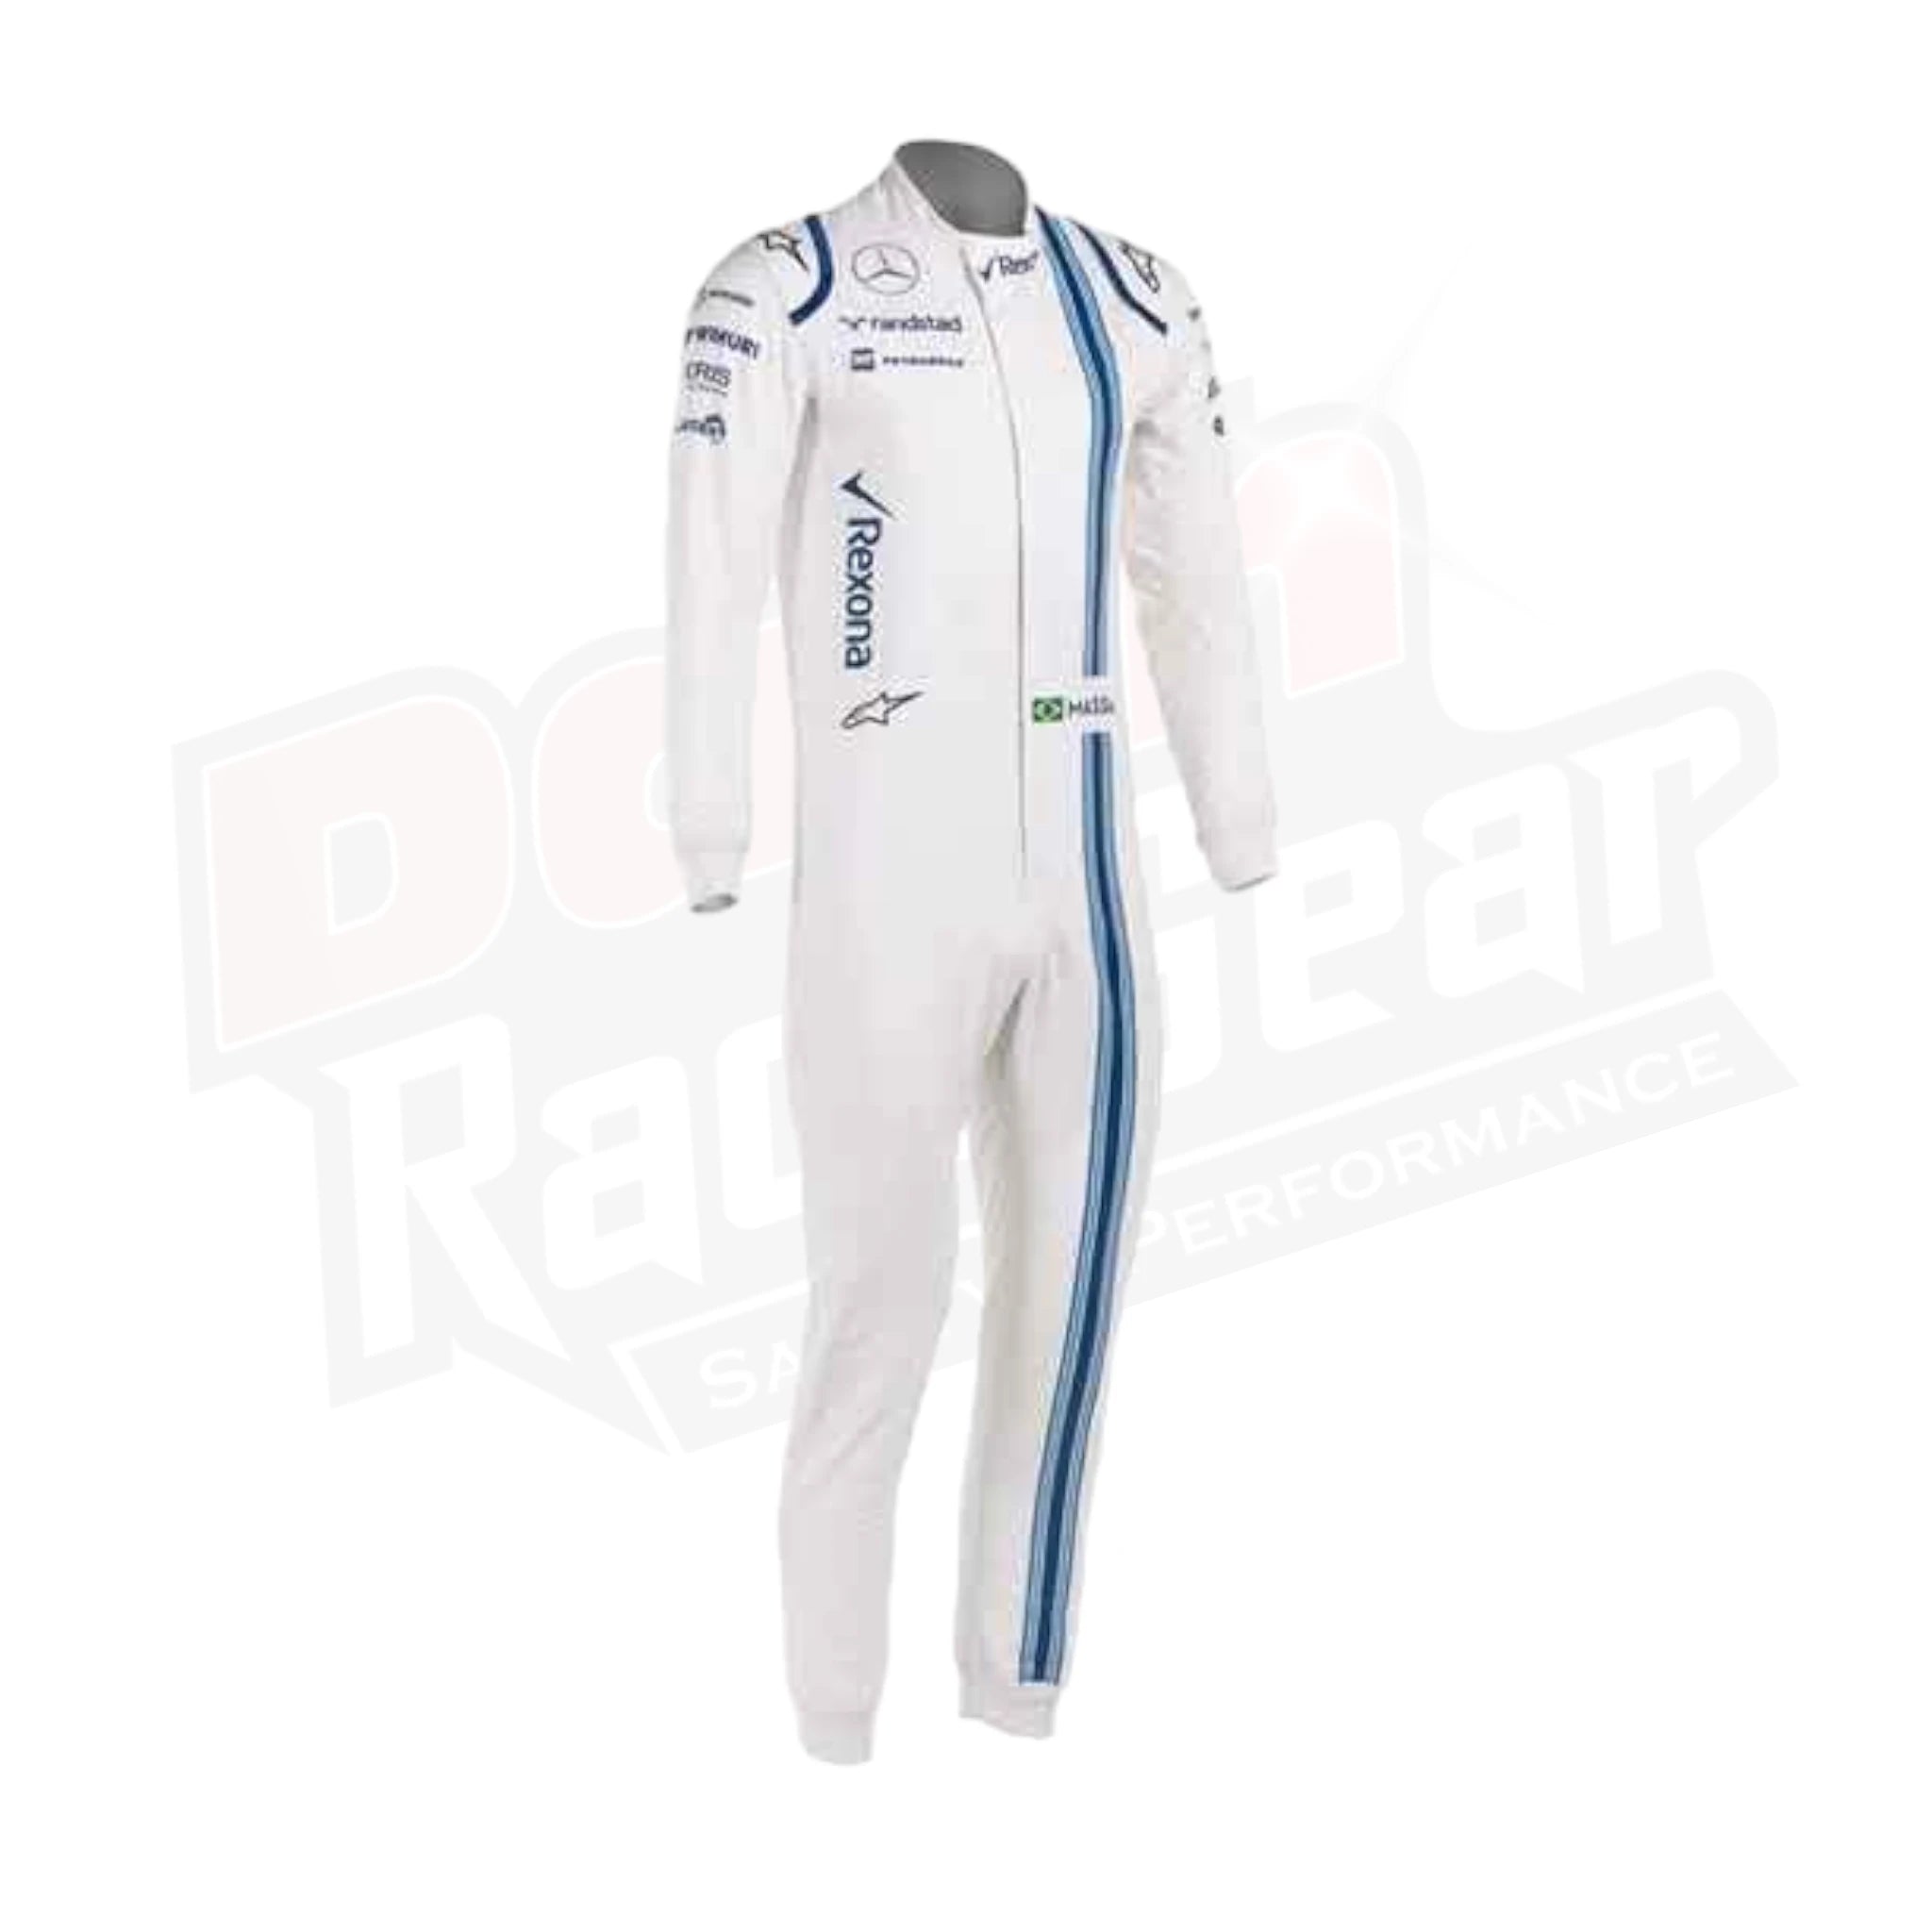 2016 Felipe Massa Racing Suit